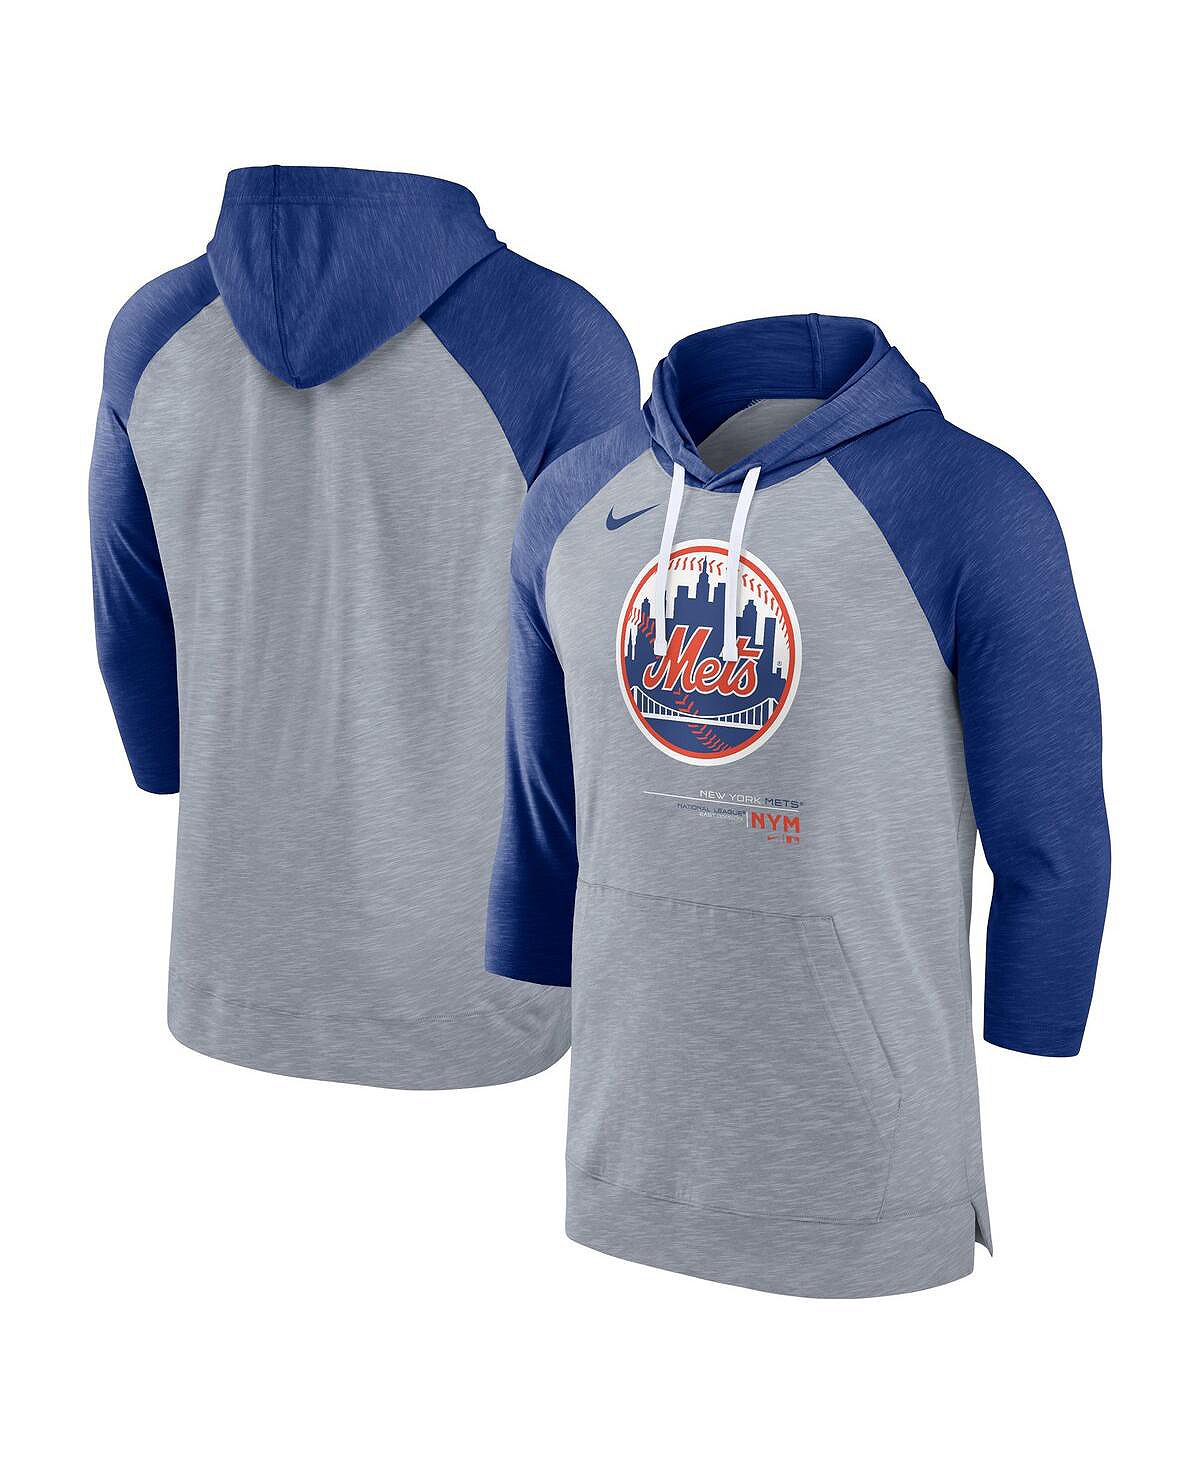 цена Мужской пуловер с капюшоном Heather Grey, Heather Royal New York Mets Baseball реглан с рукавами 3/4 Nike